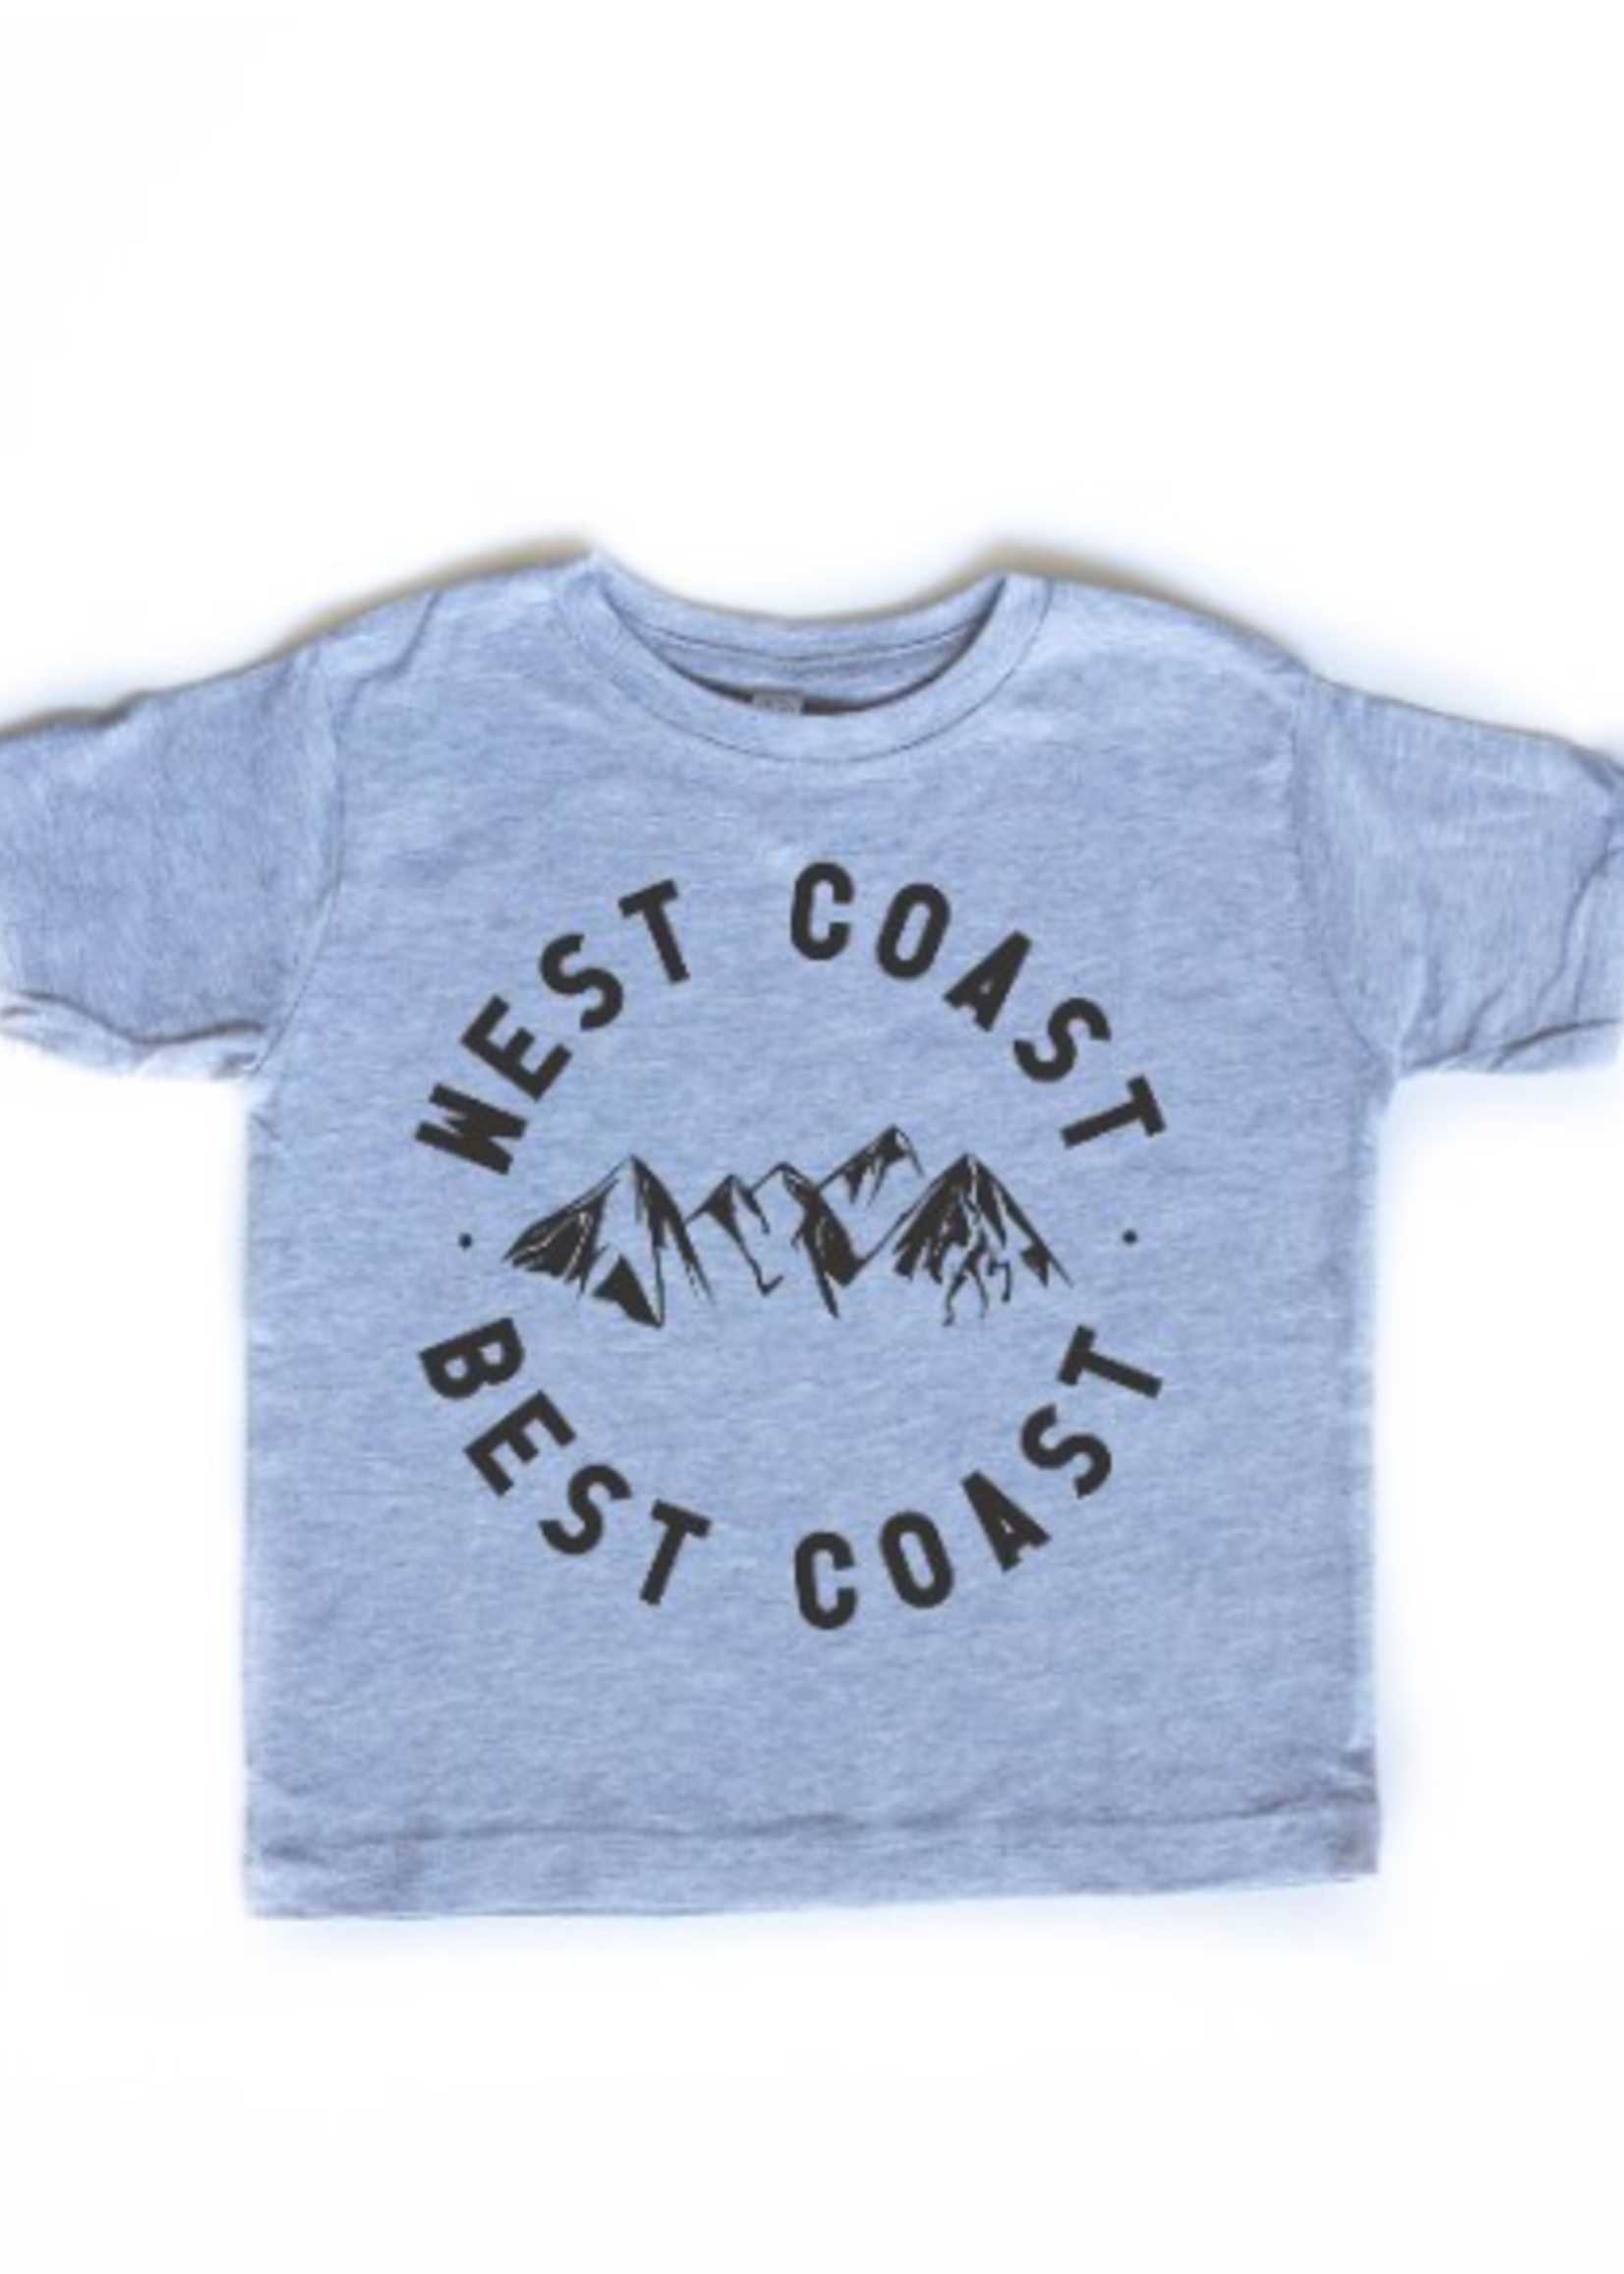 West Coast Wild Child West Coast Best Coast Toddler T-Shirt